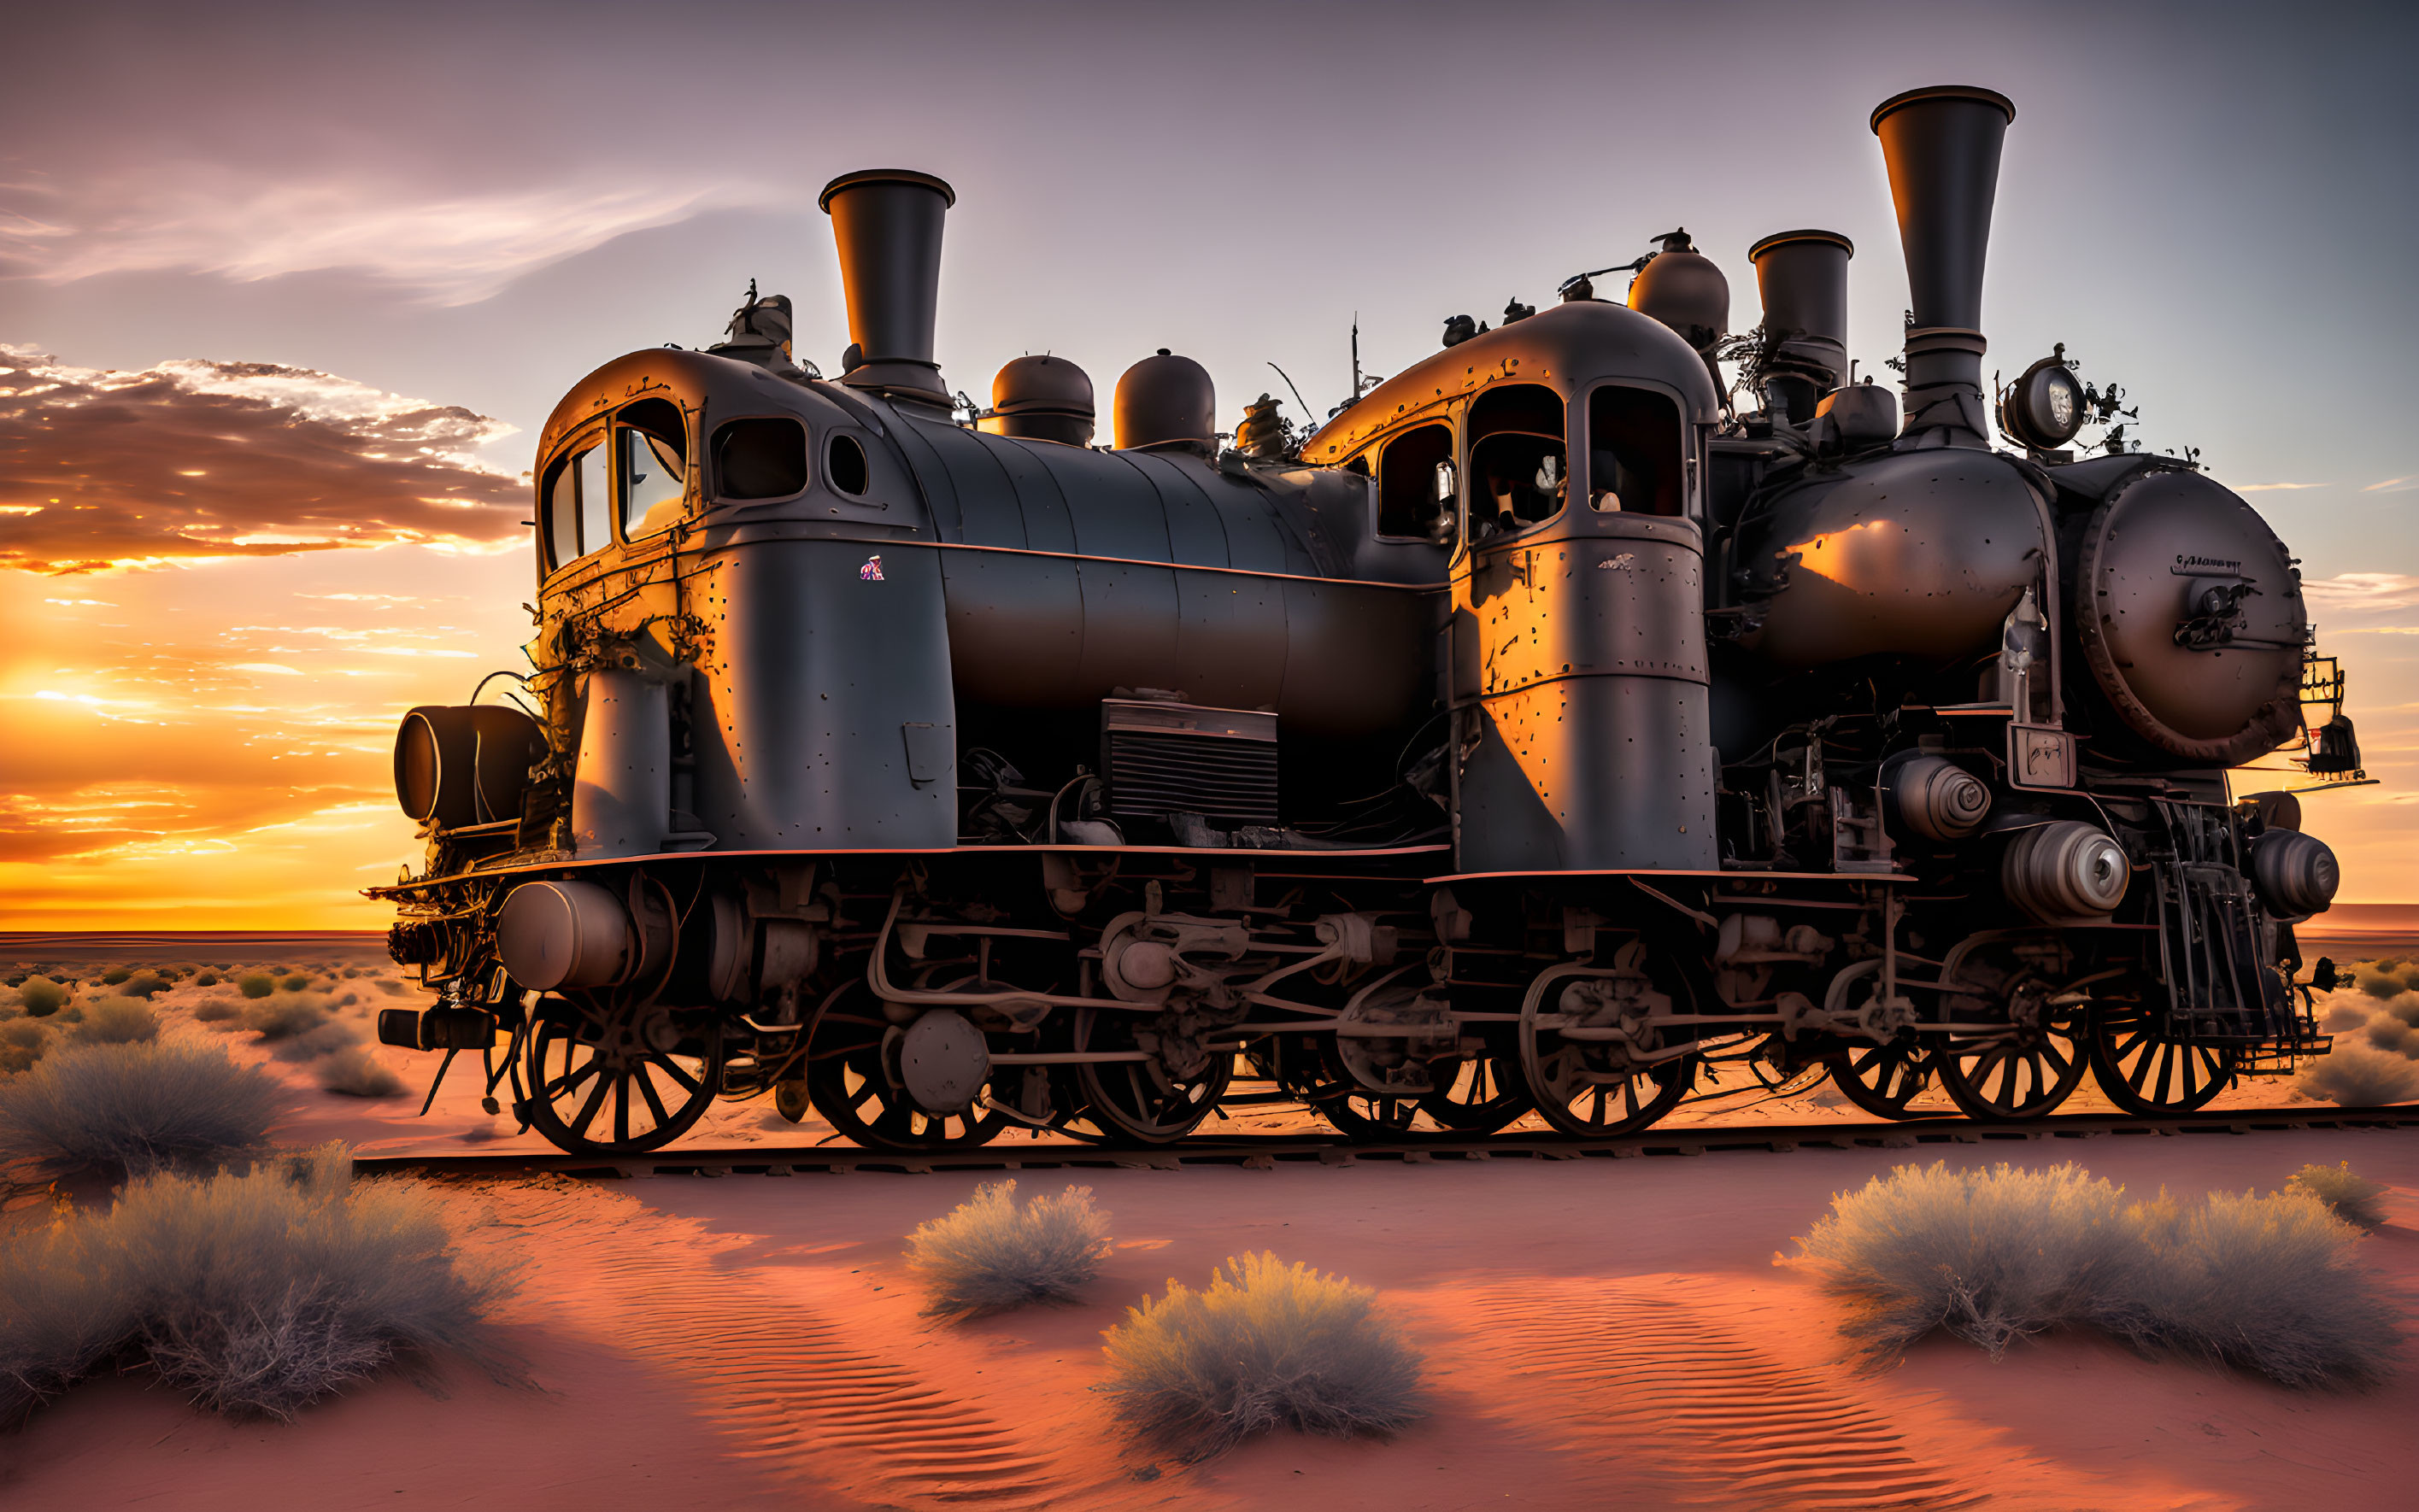 Vintage Steam Locomotive in Desert Sunset with Vibrant Orange Sky